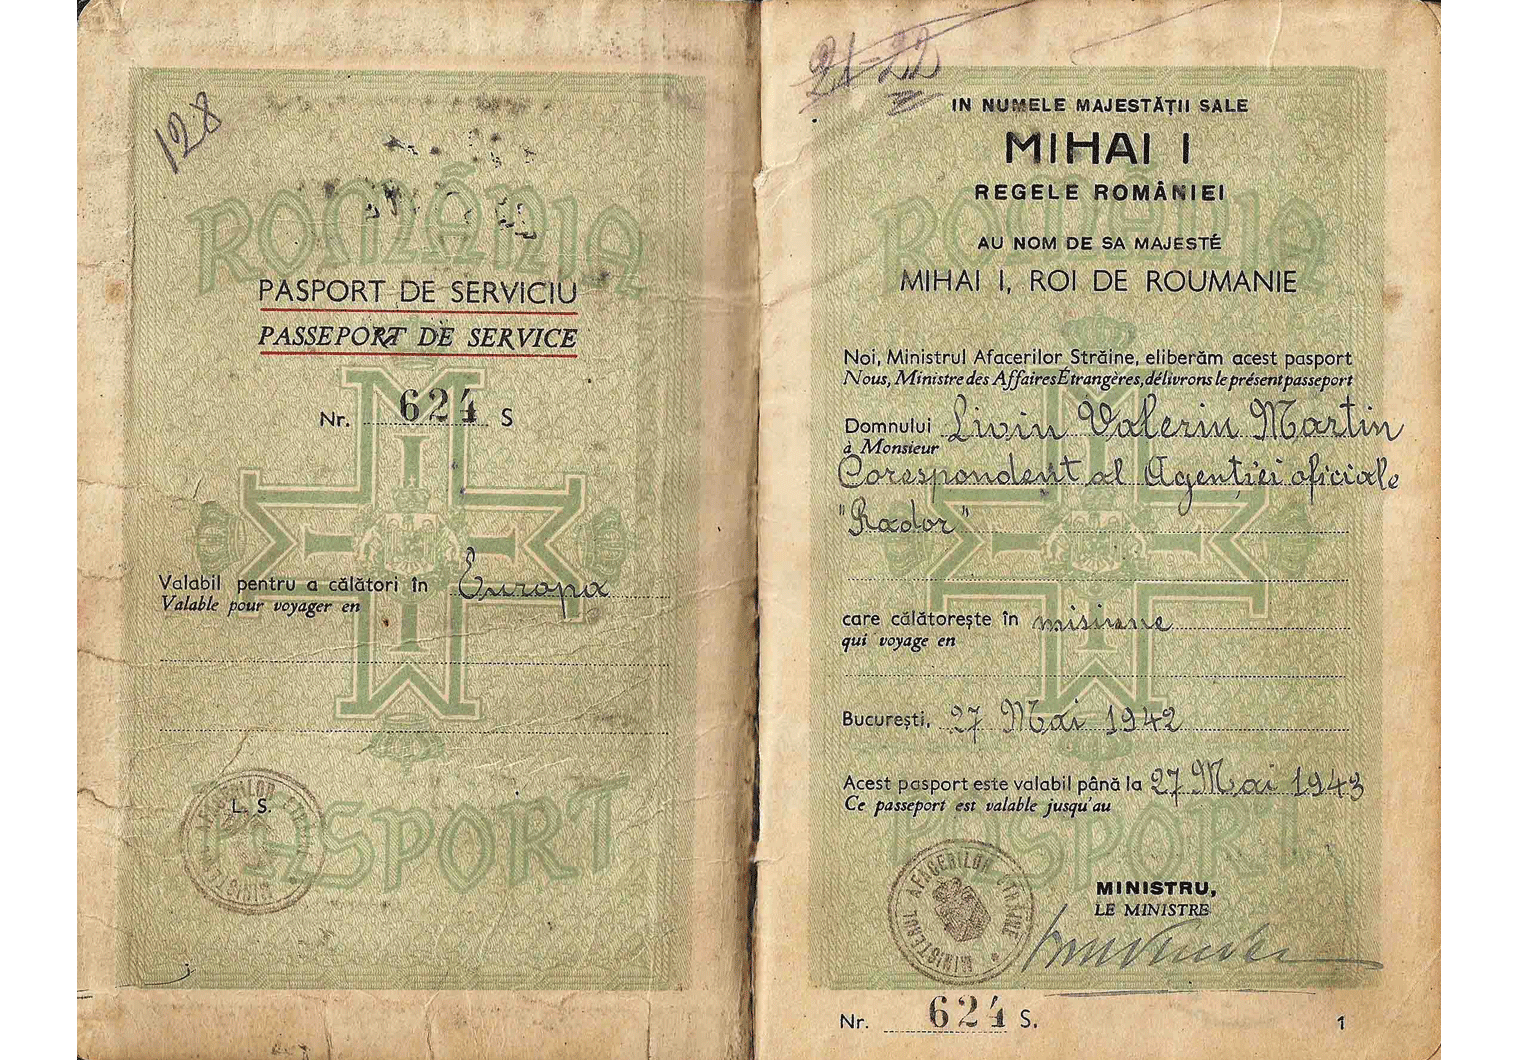 WW2 Service passport